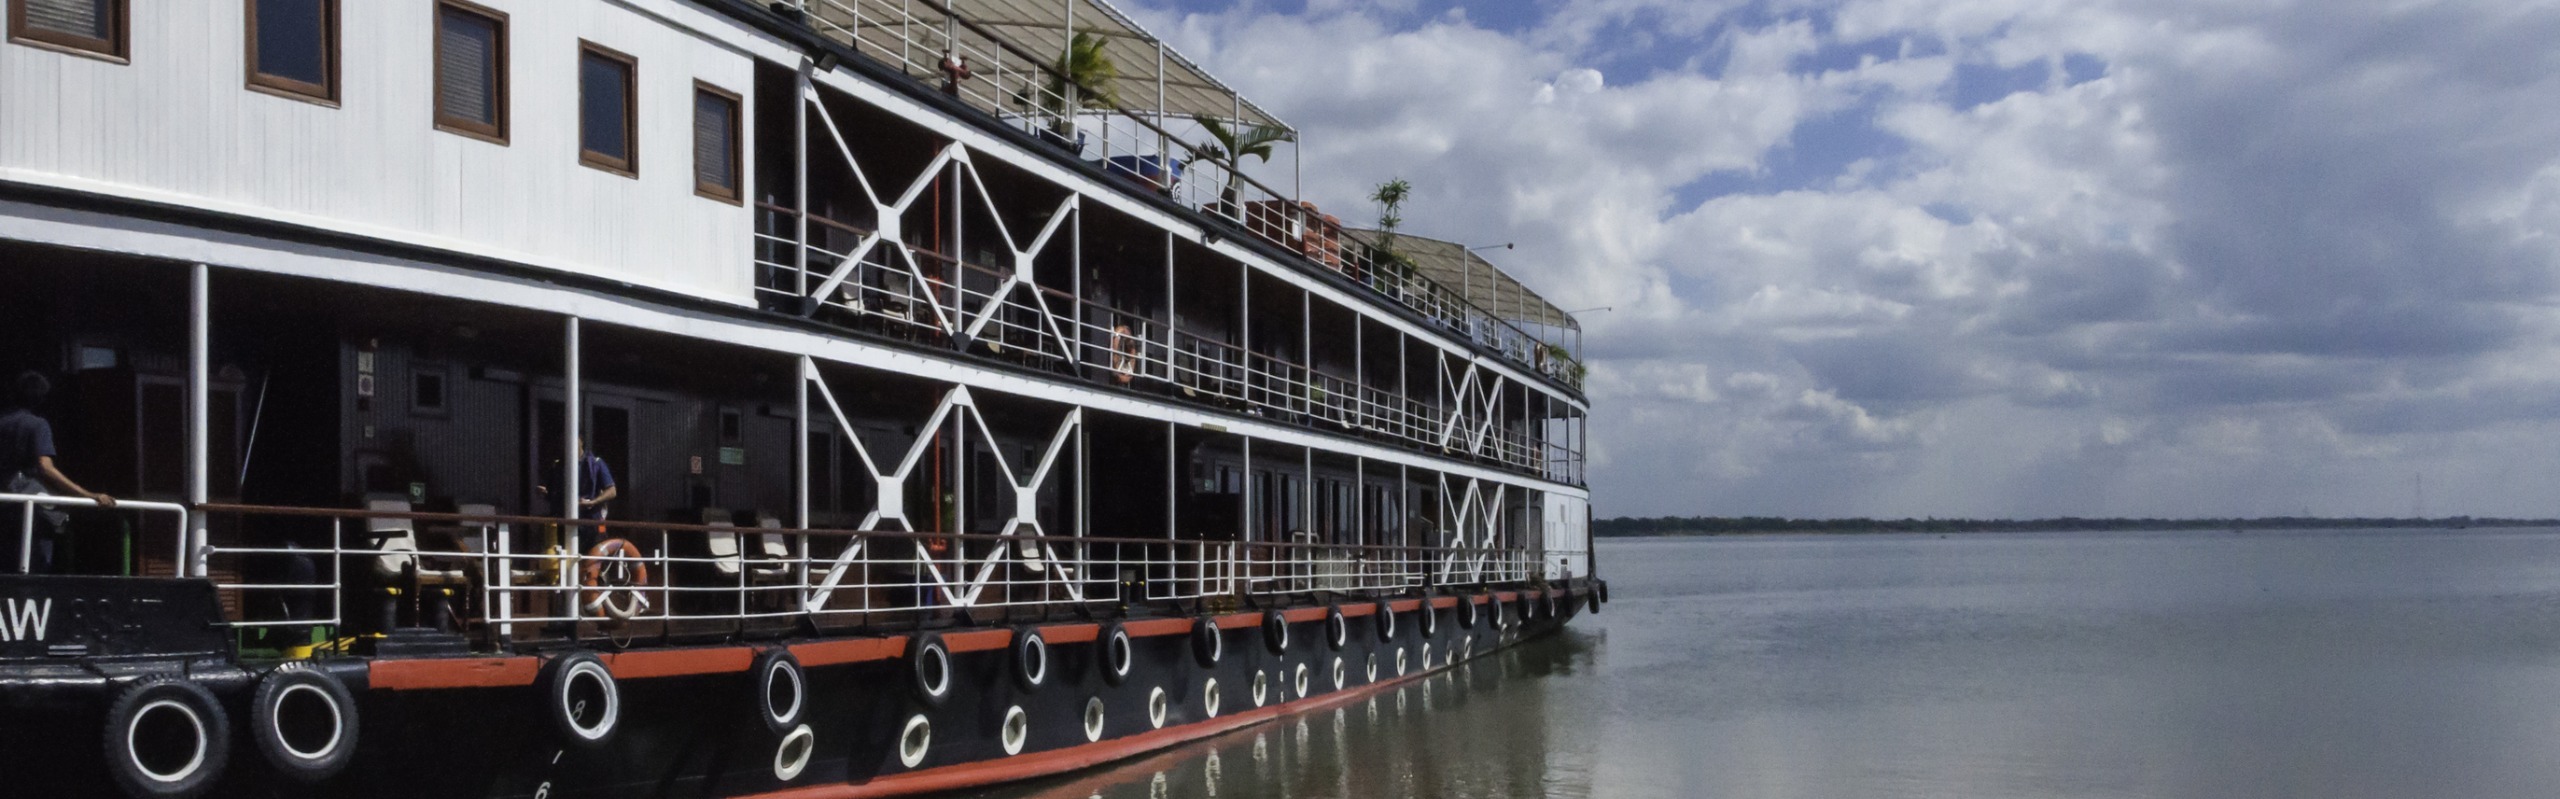 2-Week Vietnam-Cambodia Tour with a Luxurious Mekong Cruise